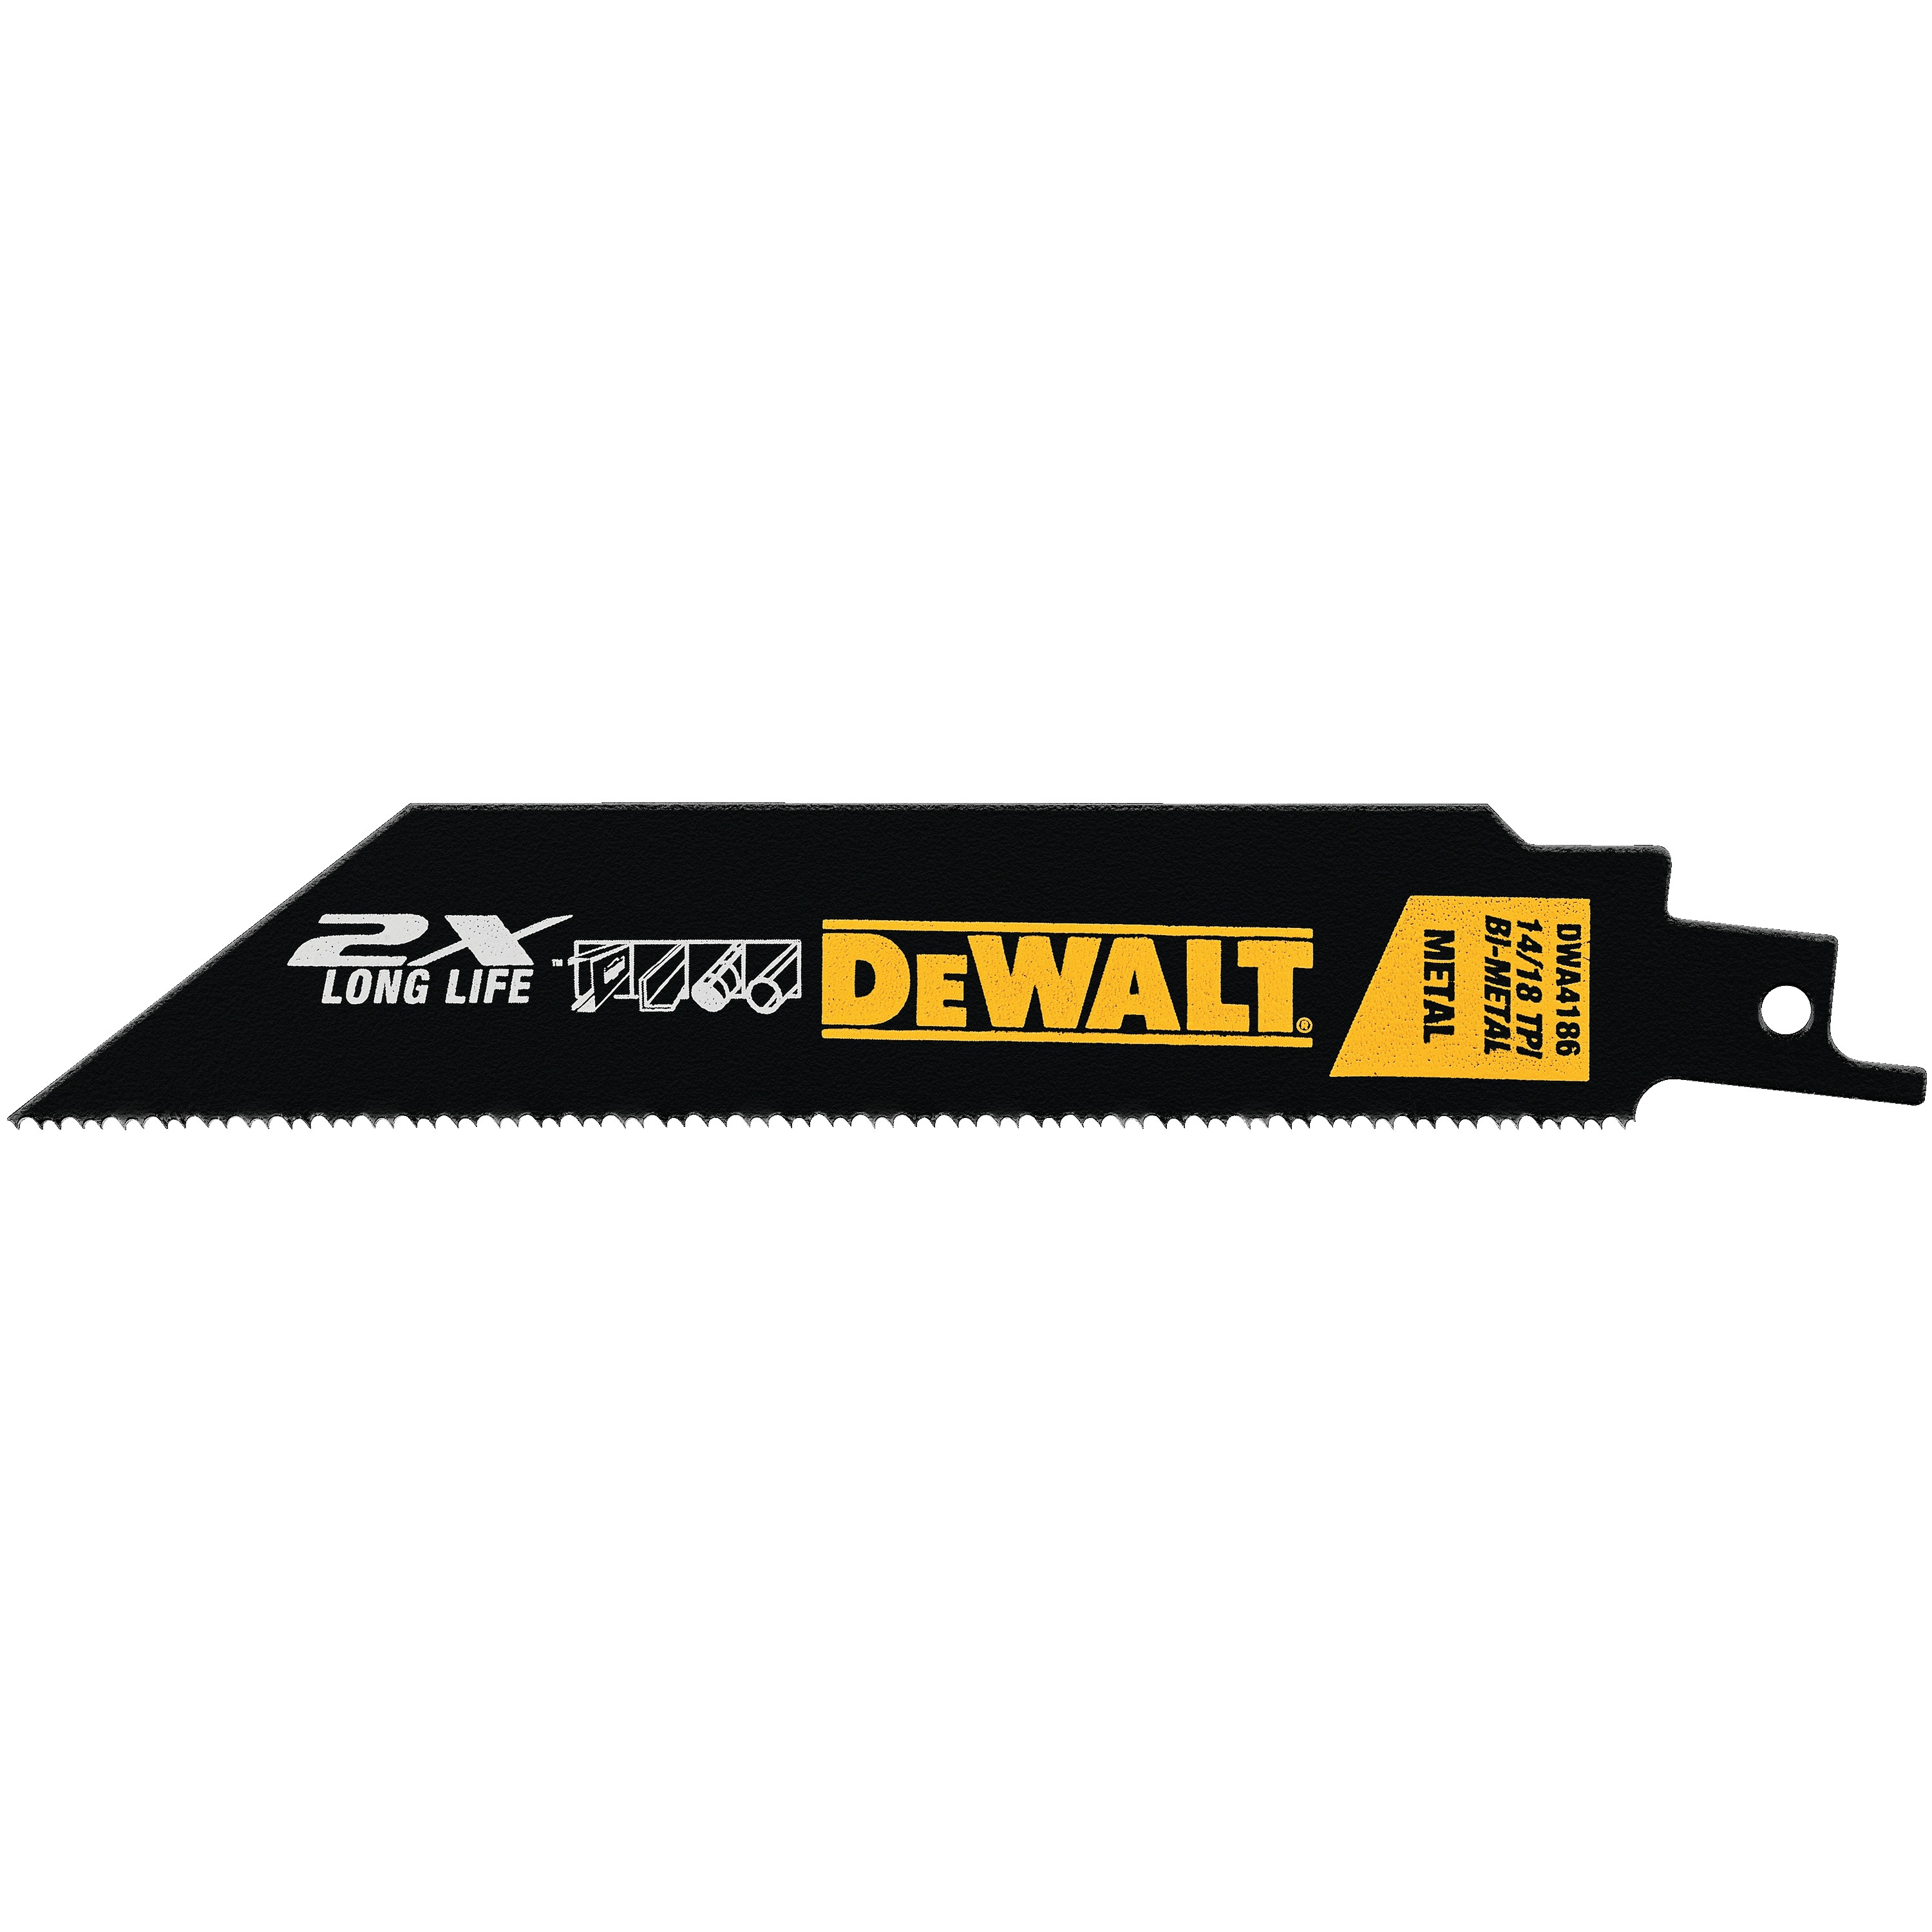 DEWALT - 6 2X Premium Metal Cutting Blade 5 pack - DWA4186